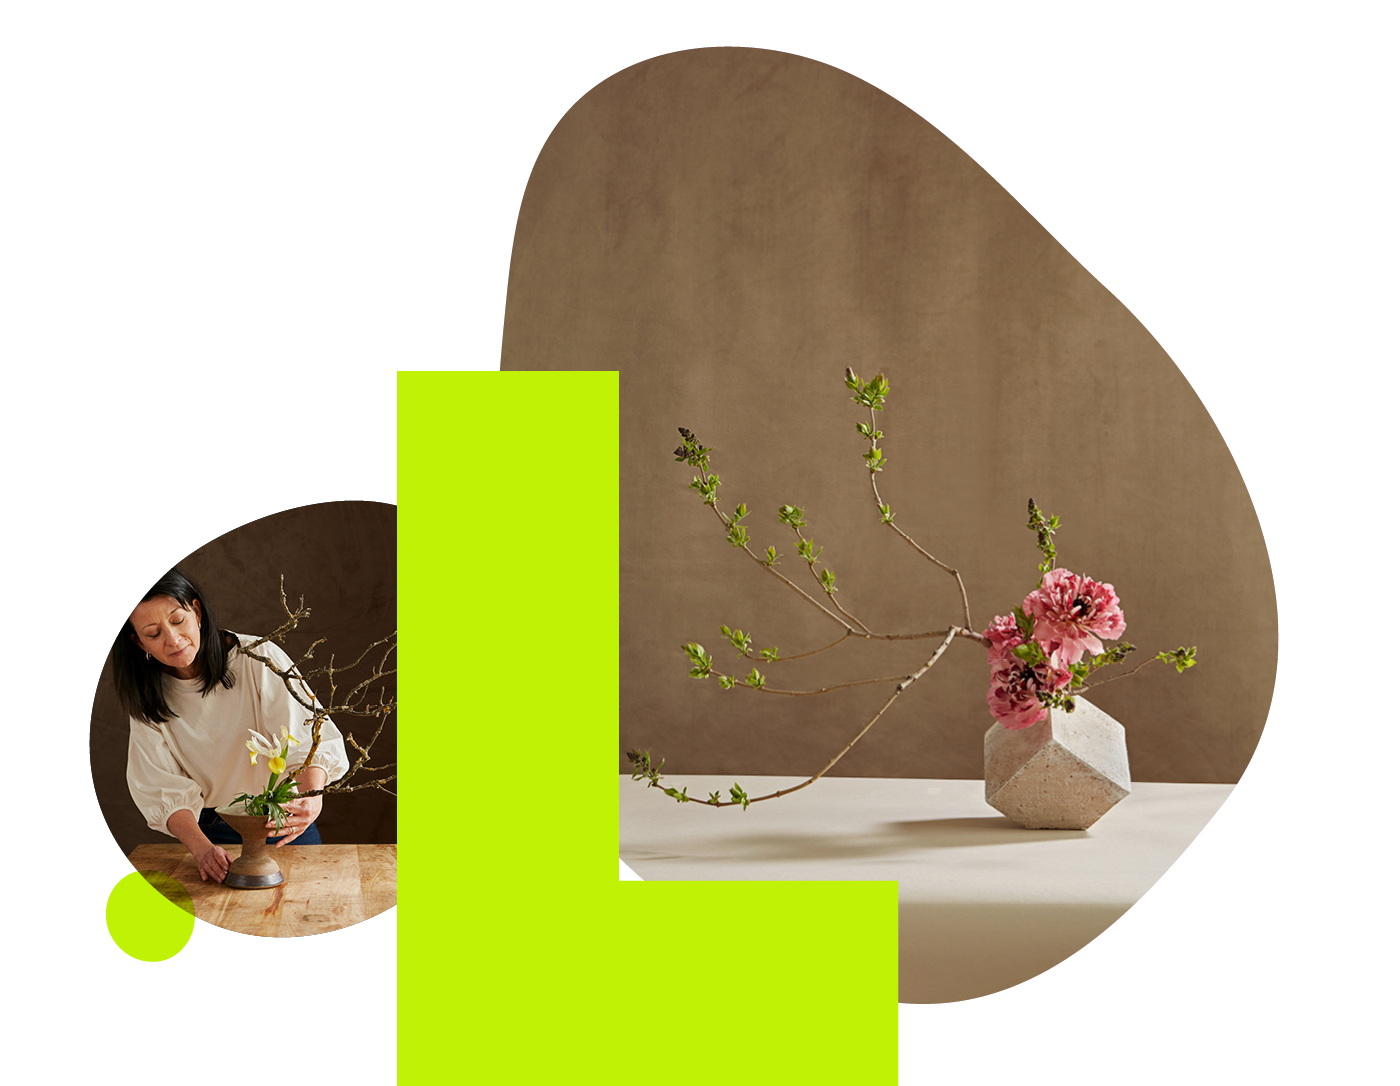 Louise Worner: The tranquil beauty of Ikebana